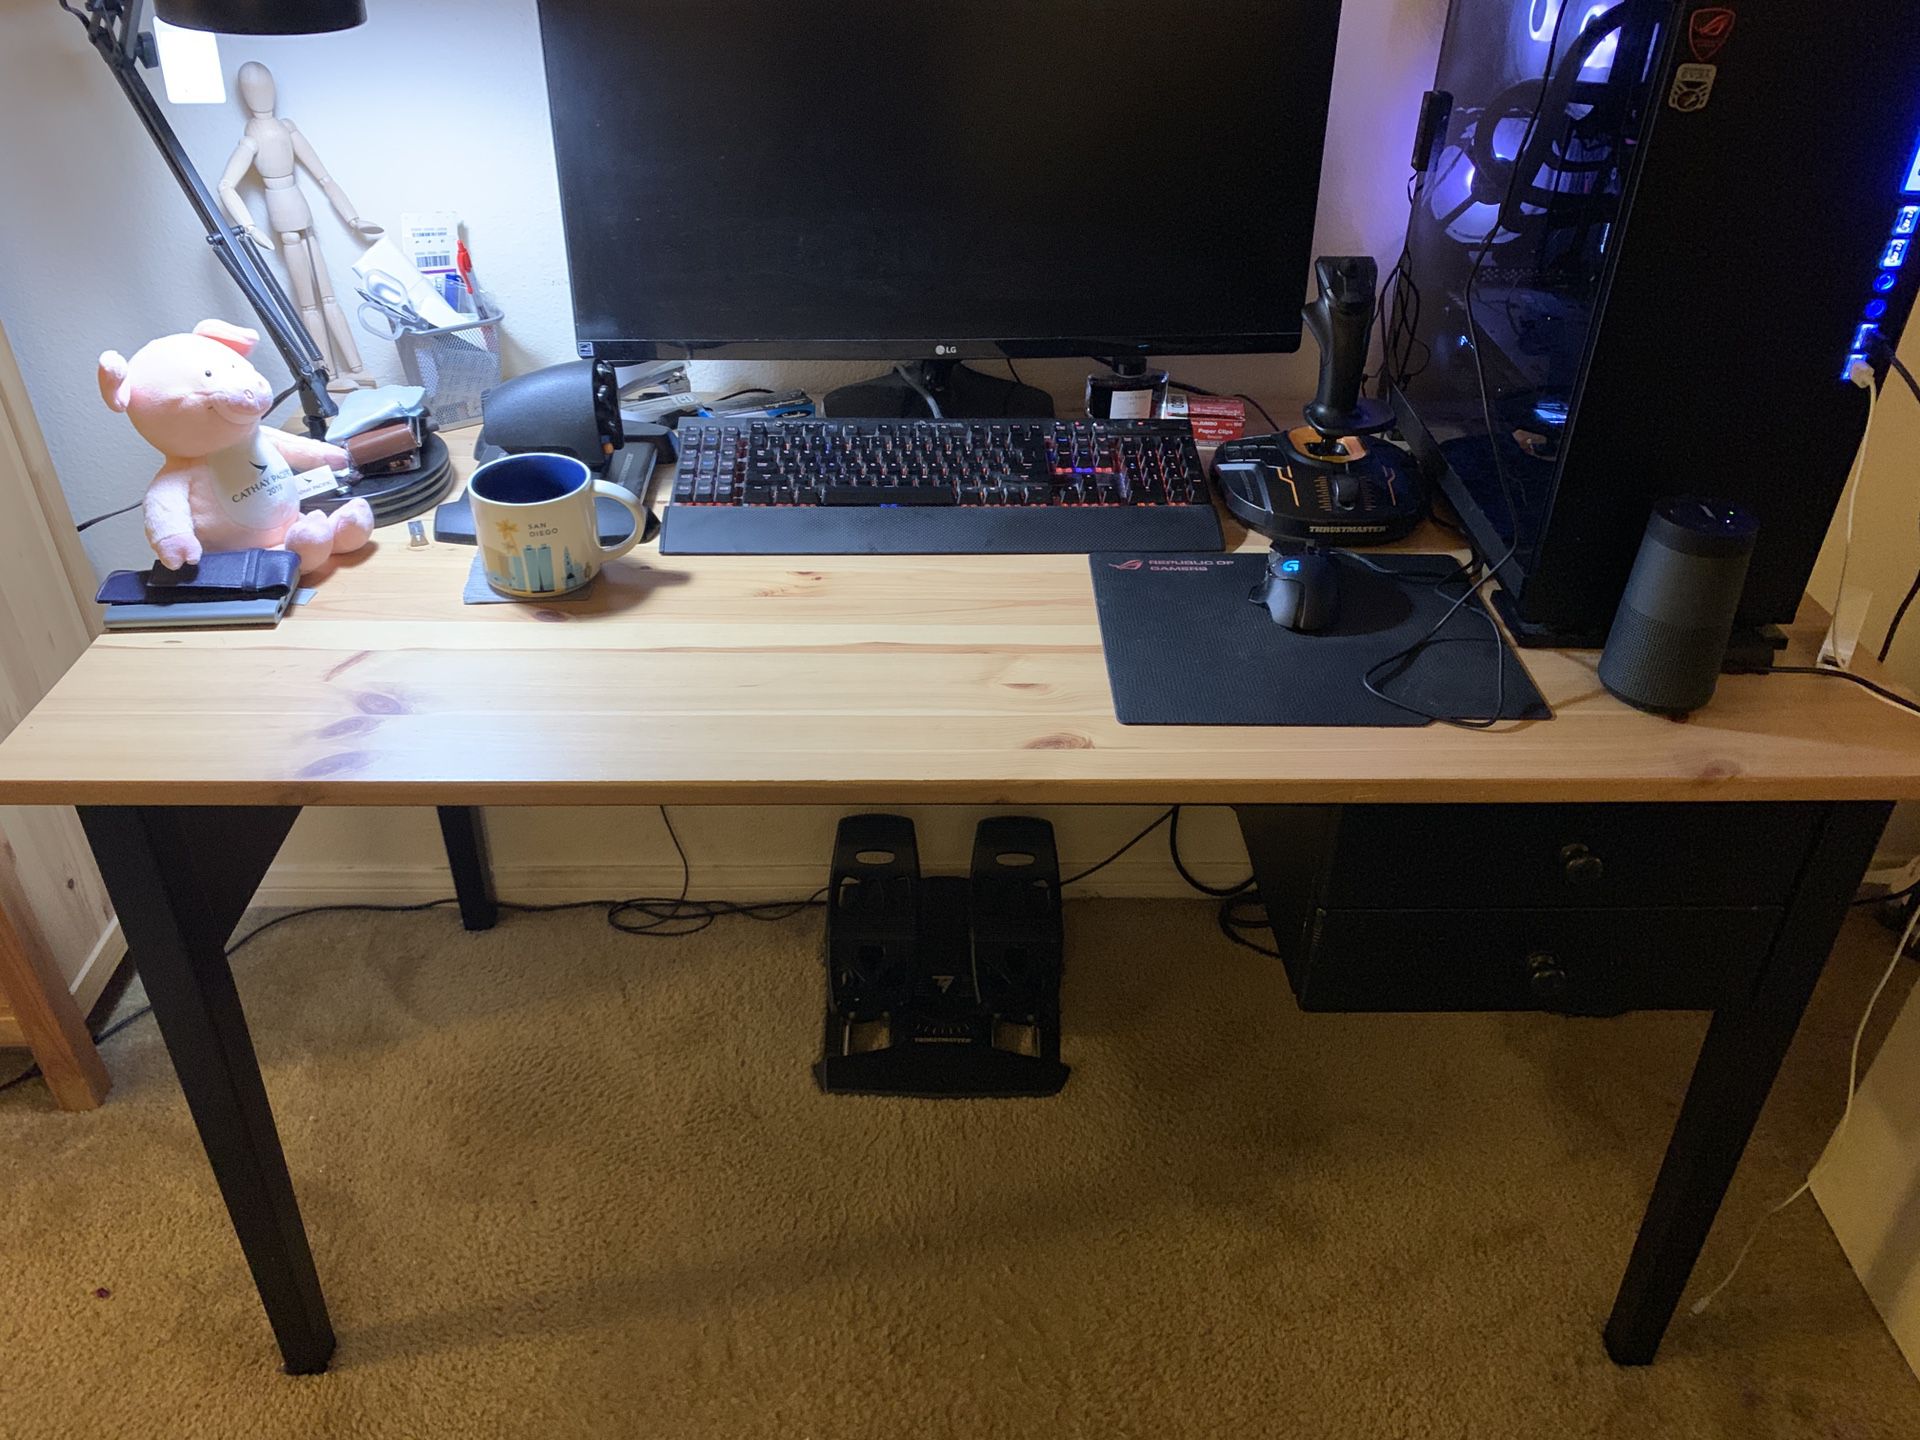 IKEA ARKELSTORP Desk